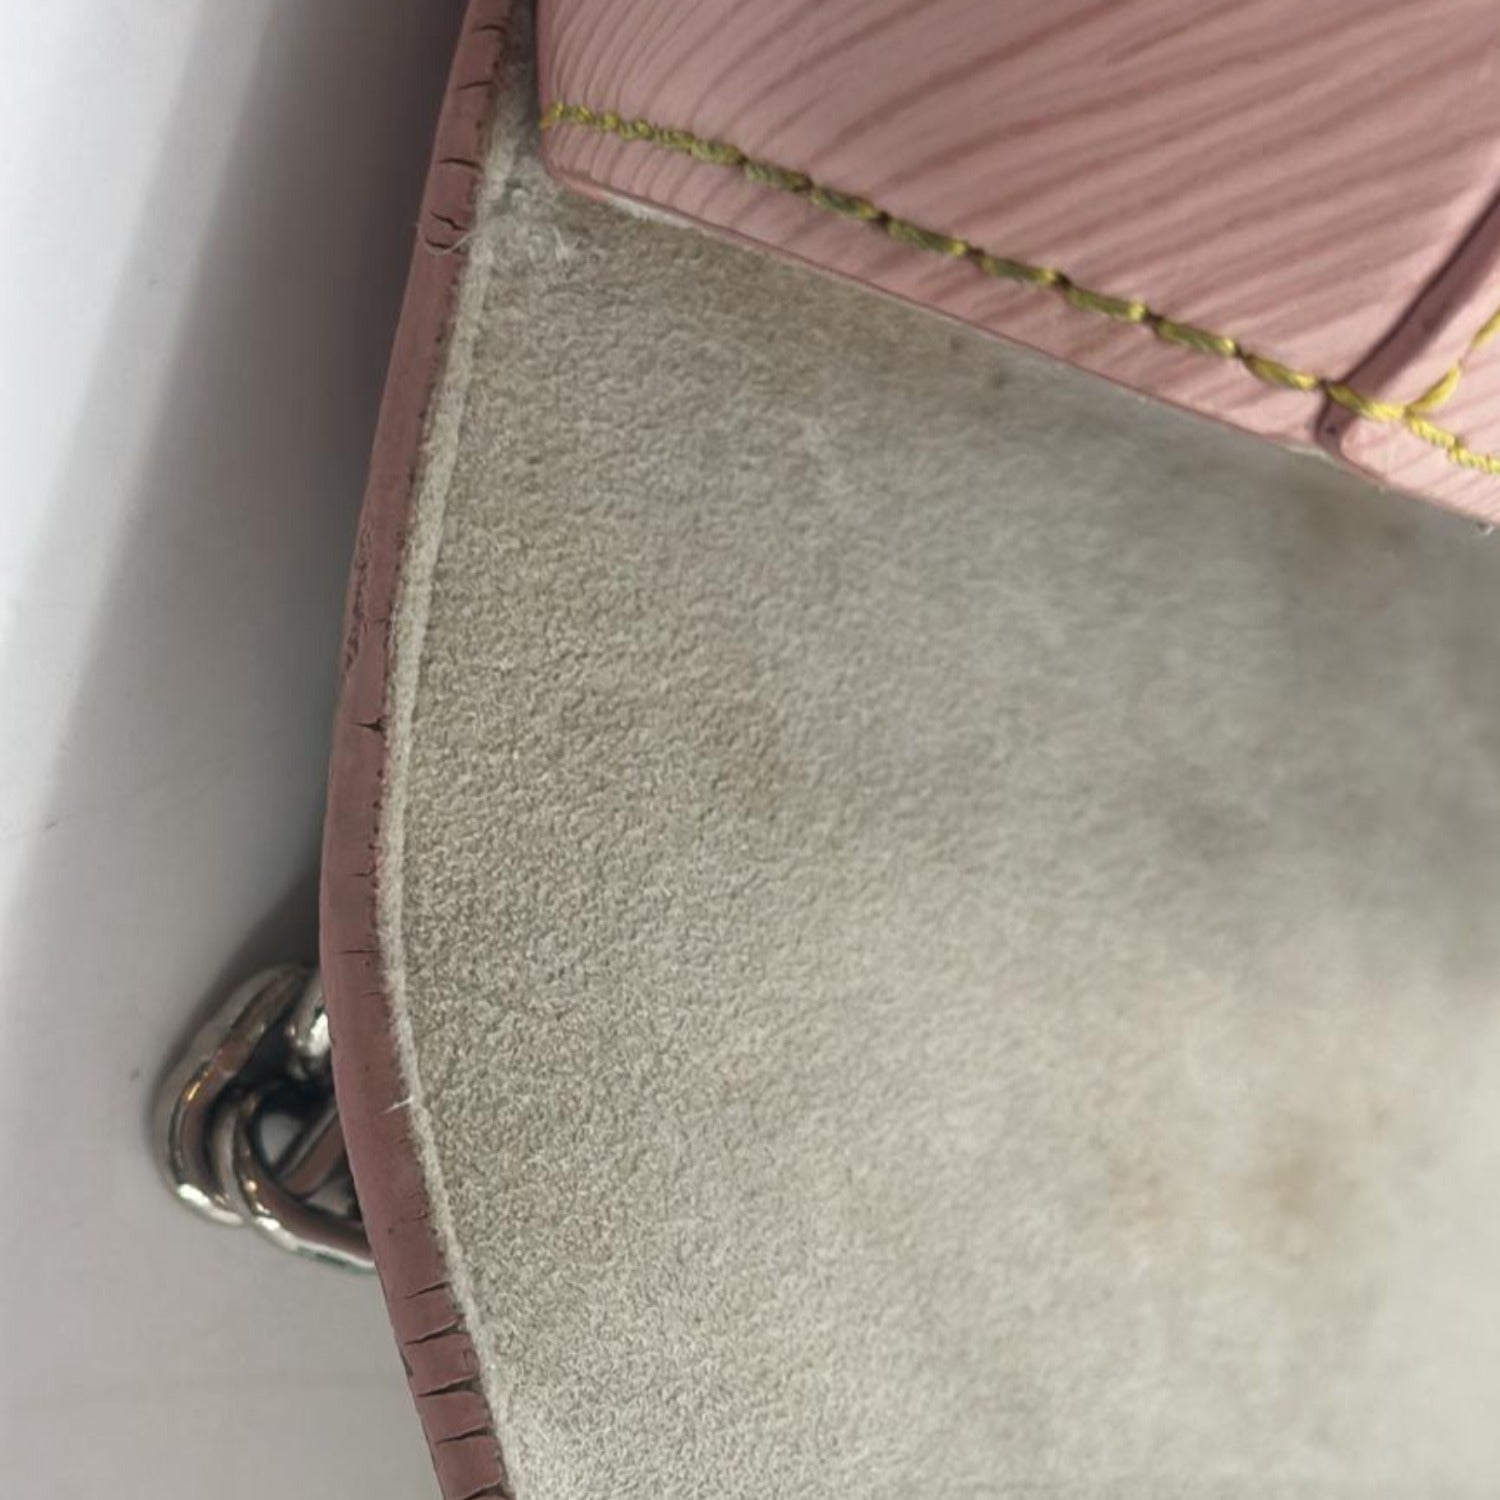 Louis Vuitton Vintage - Epi Twist MM Bag - Pink - Leather and Epi